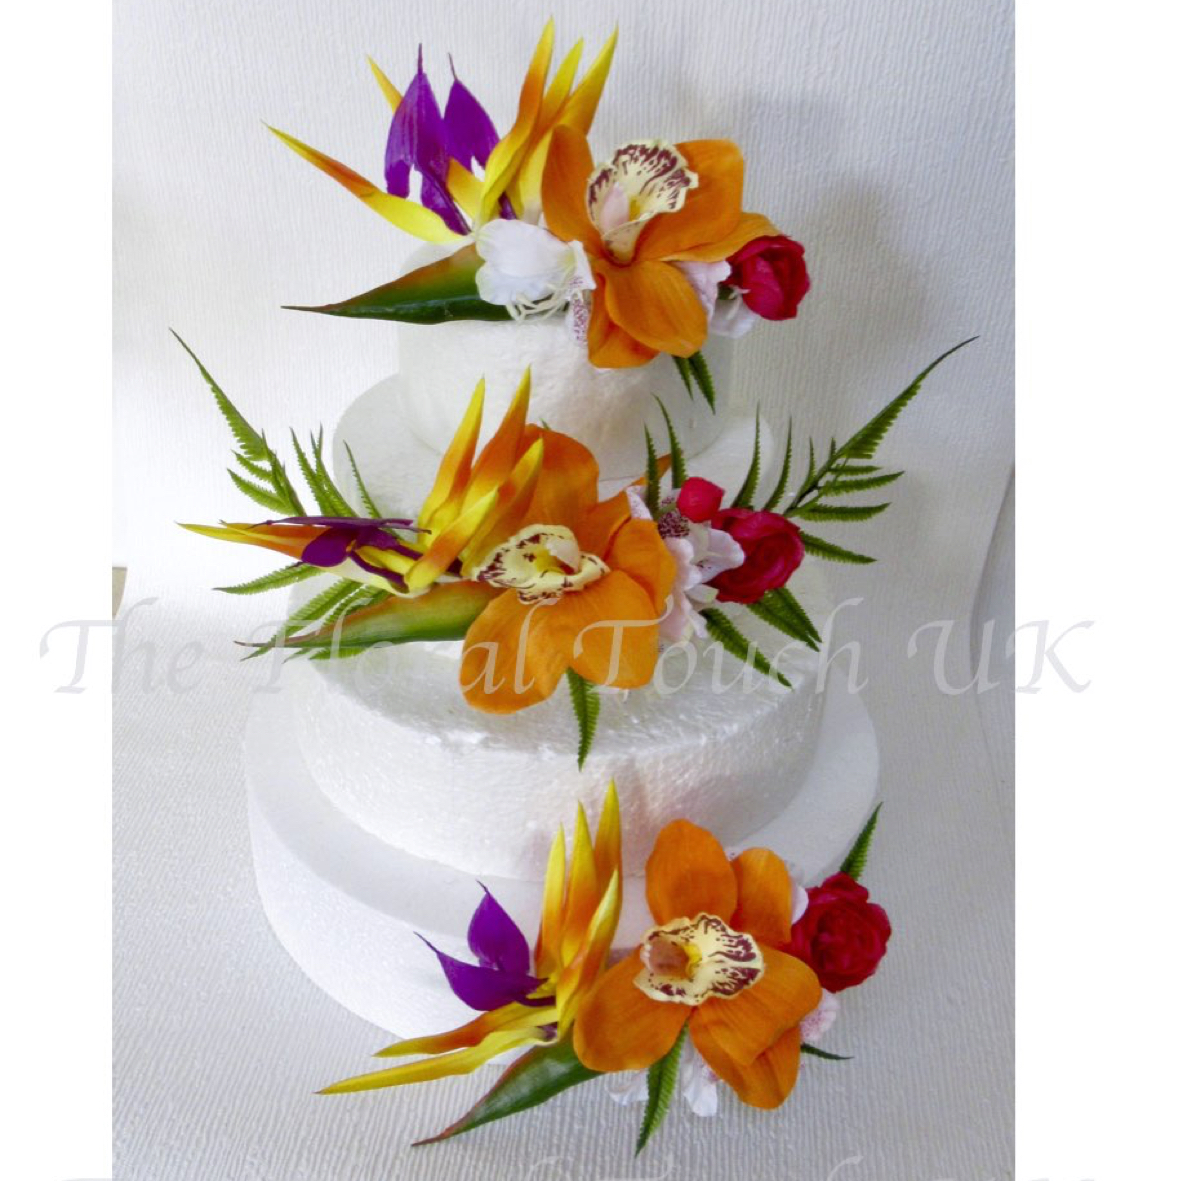 Bird of paradise cake topper, tropical bird of paradise flowers